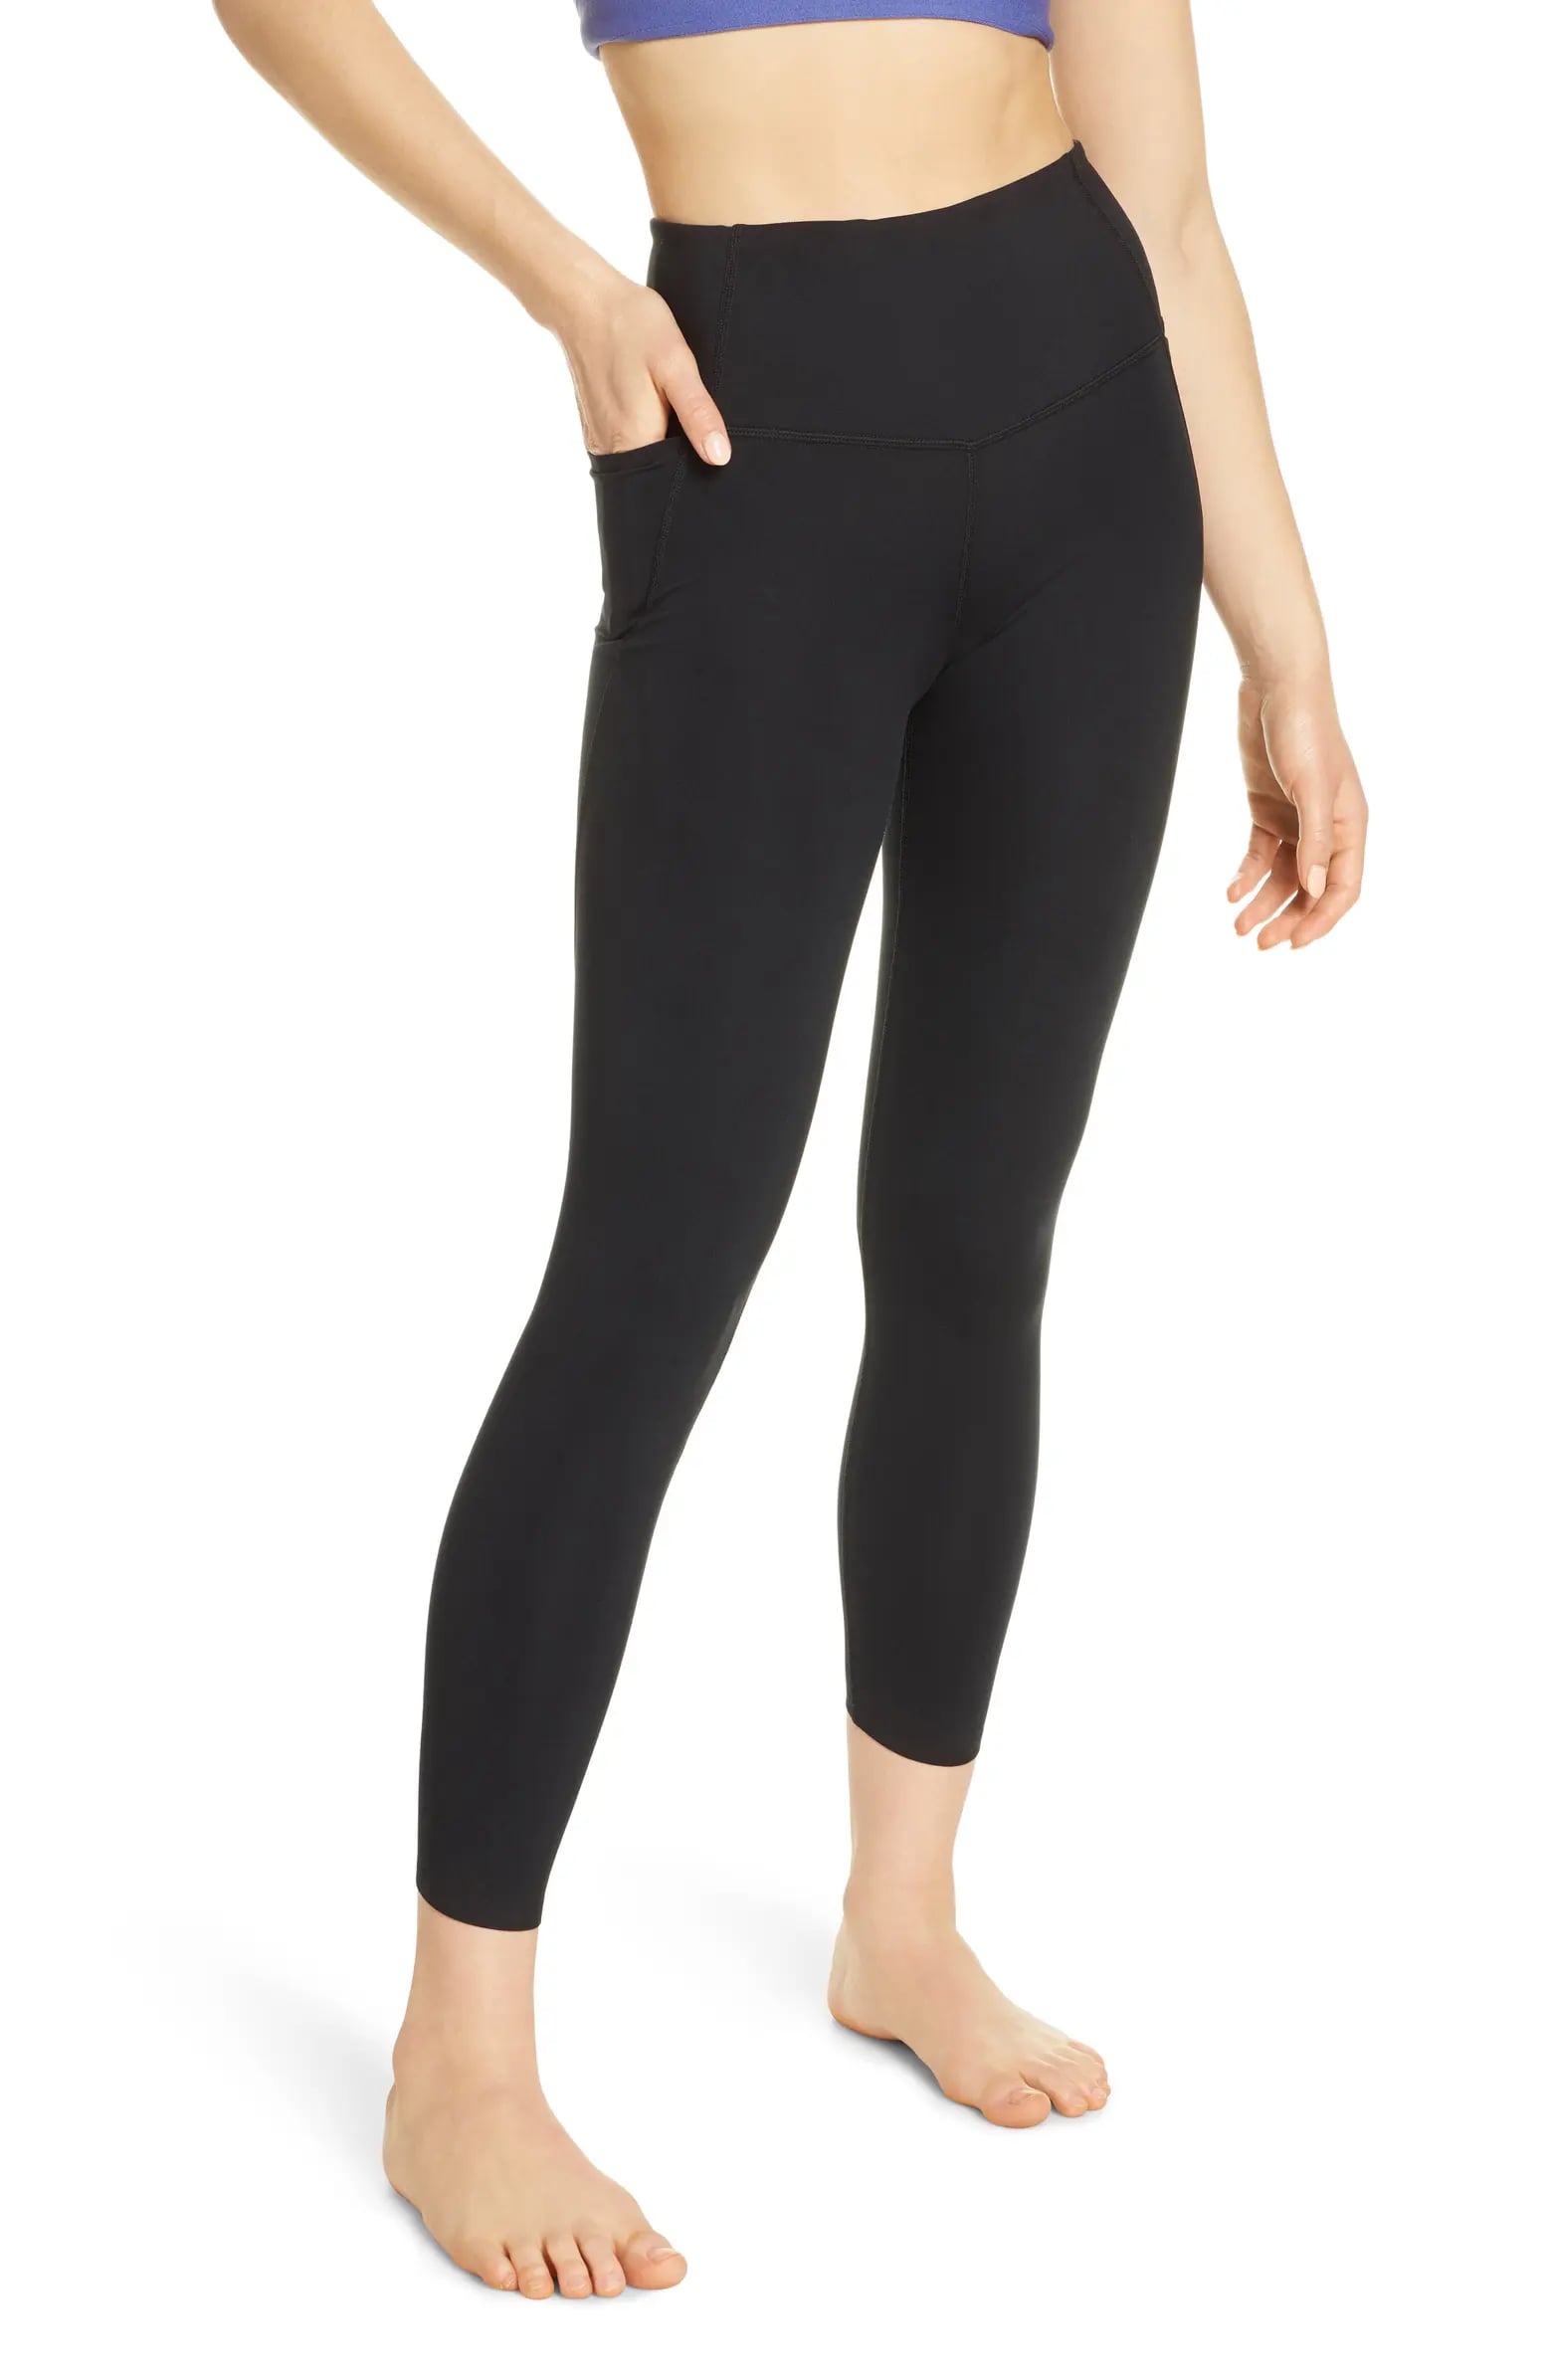 Zella Z by medium gym/yoga athleisure leggings - $25 - From Melinda